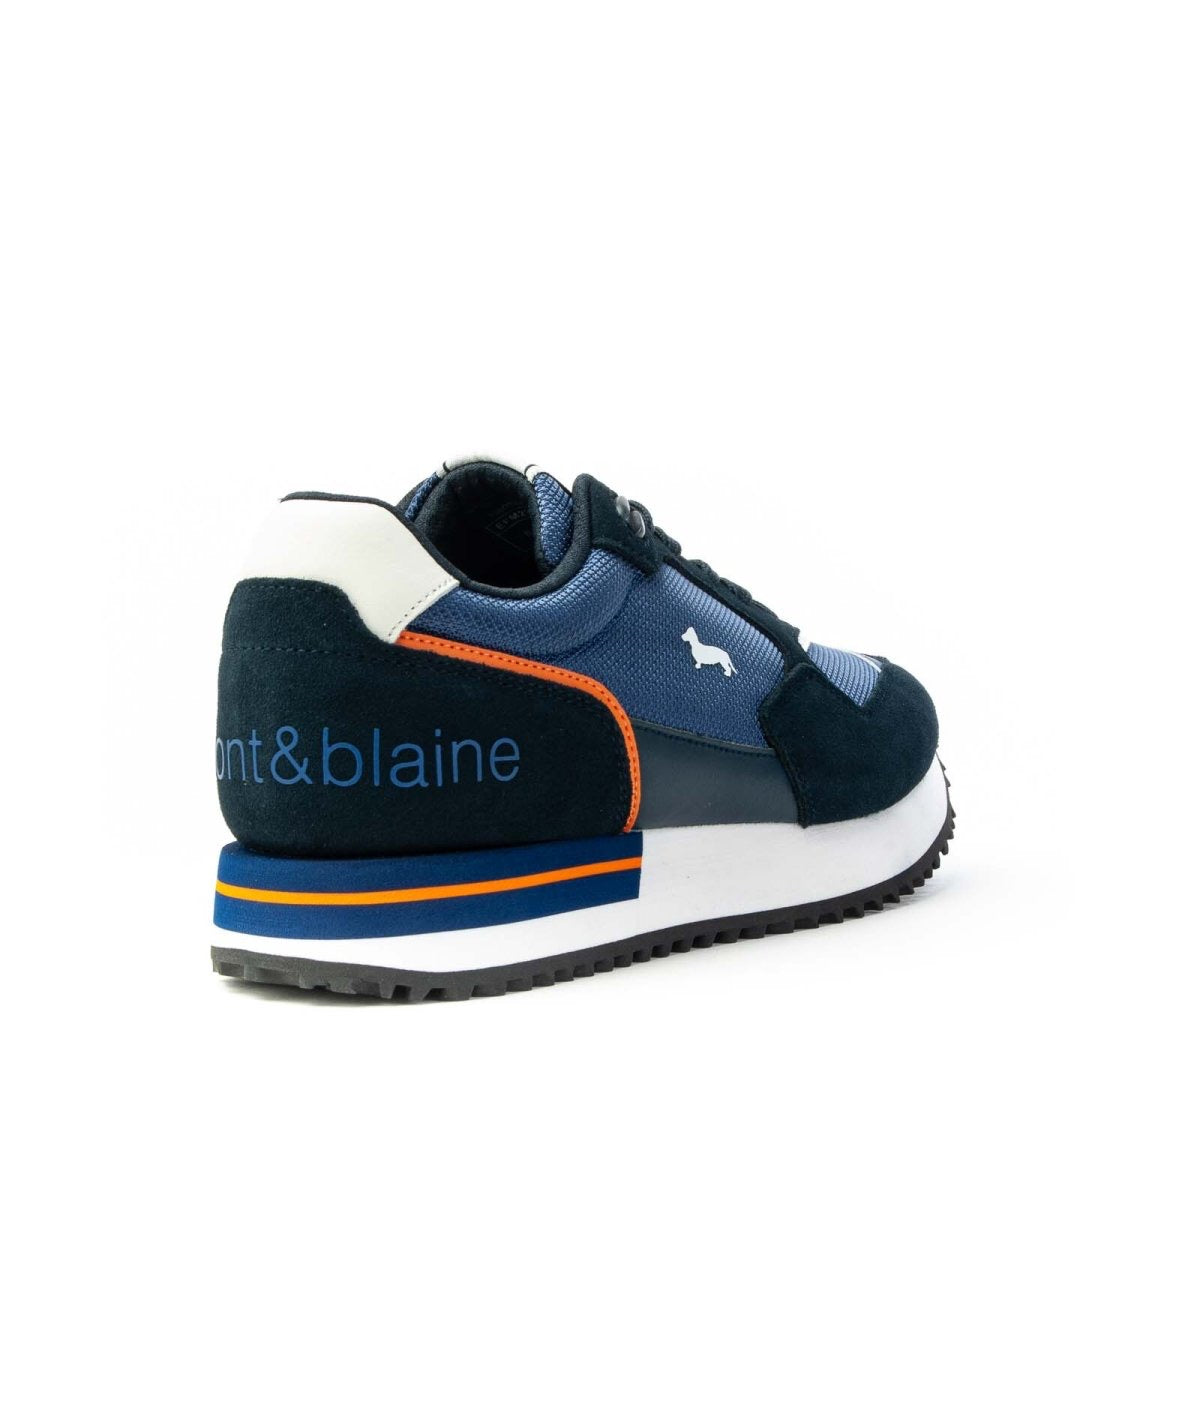 Harmont&blaine Sneakers Uomo Blu. EFM222.040.6170